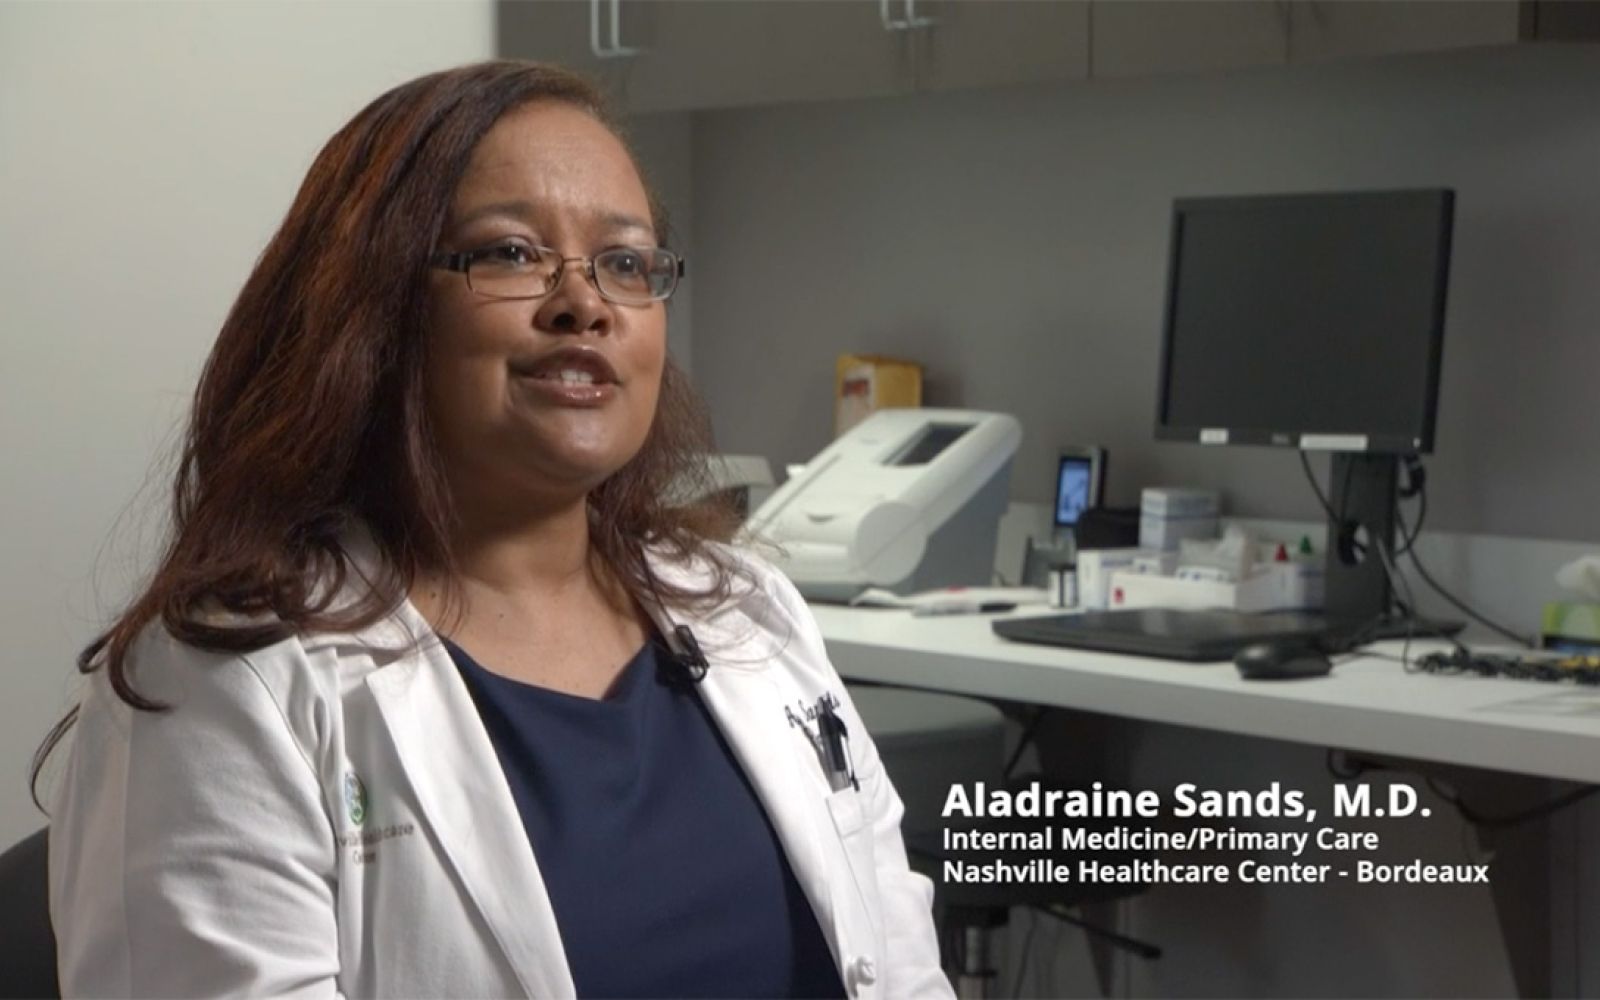 Dr. Aladraine Sands